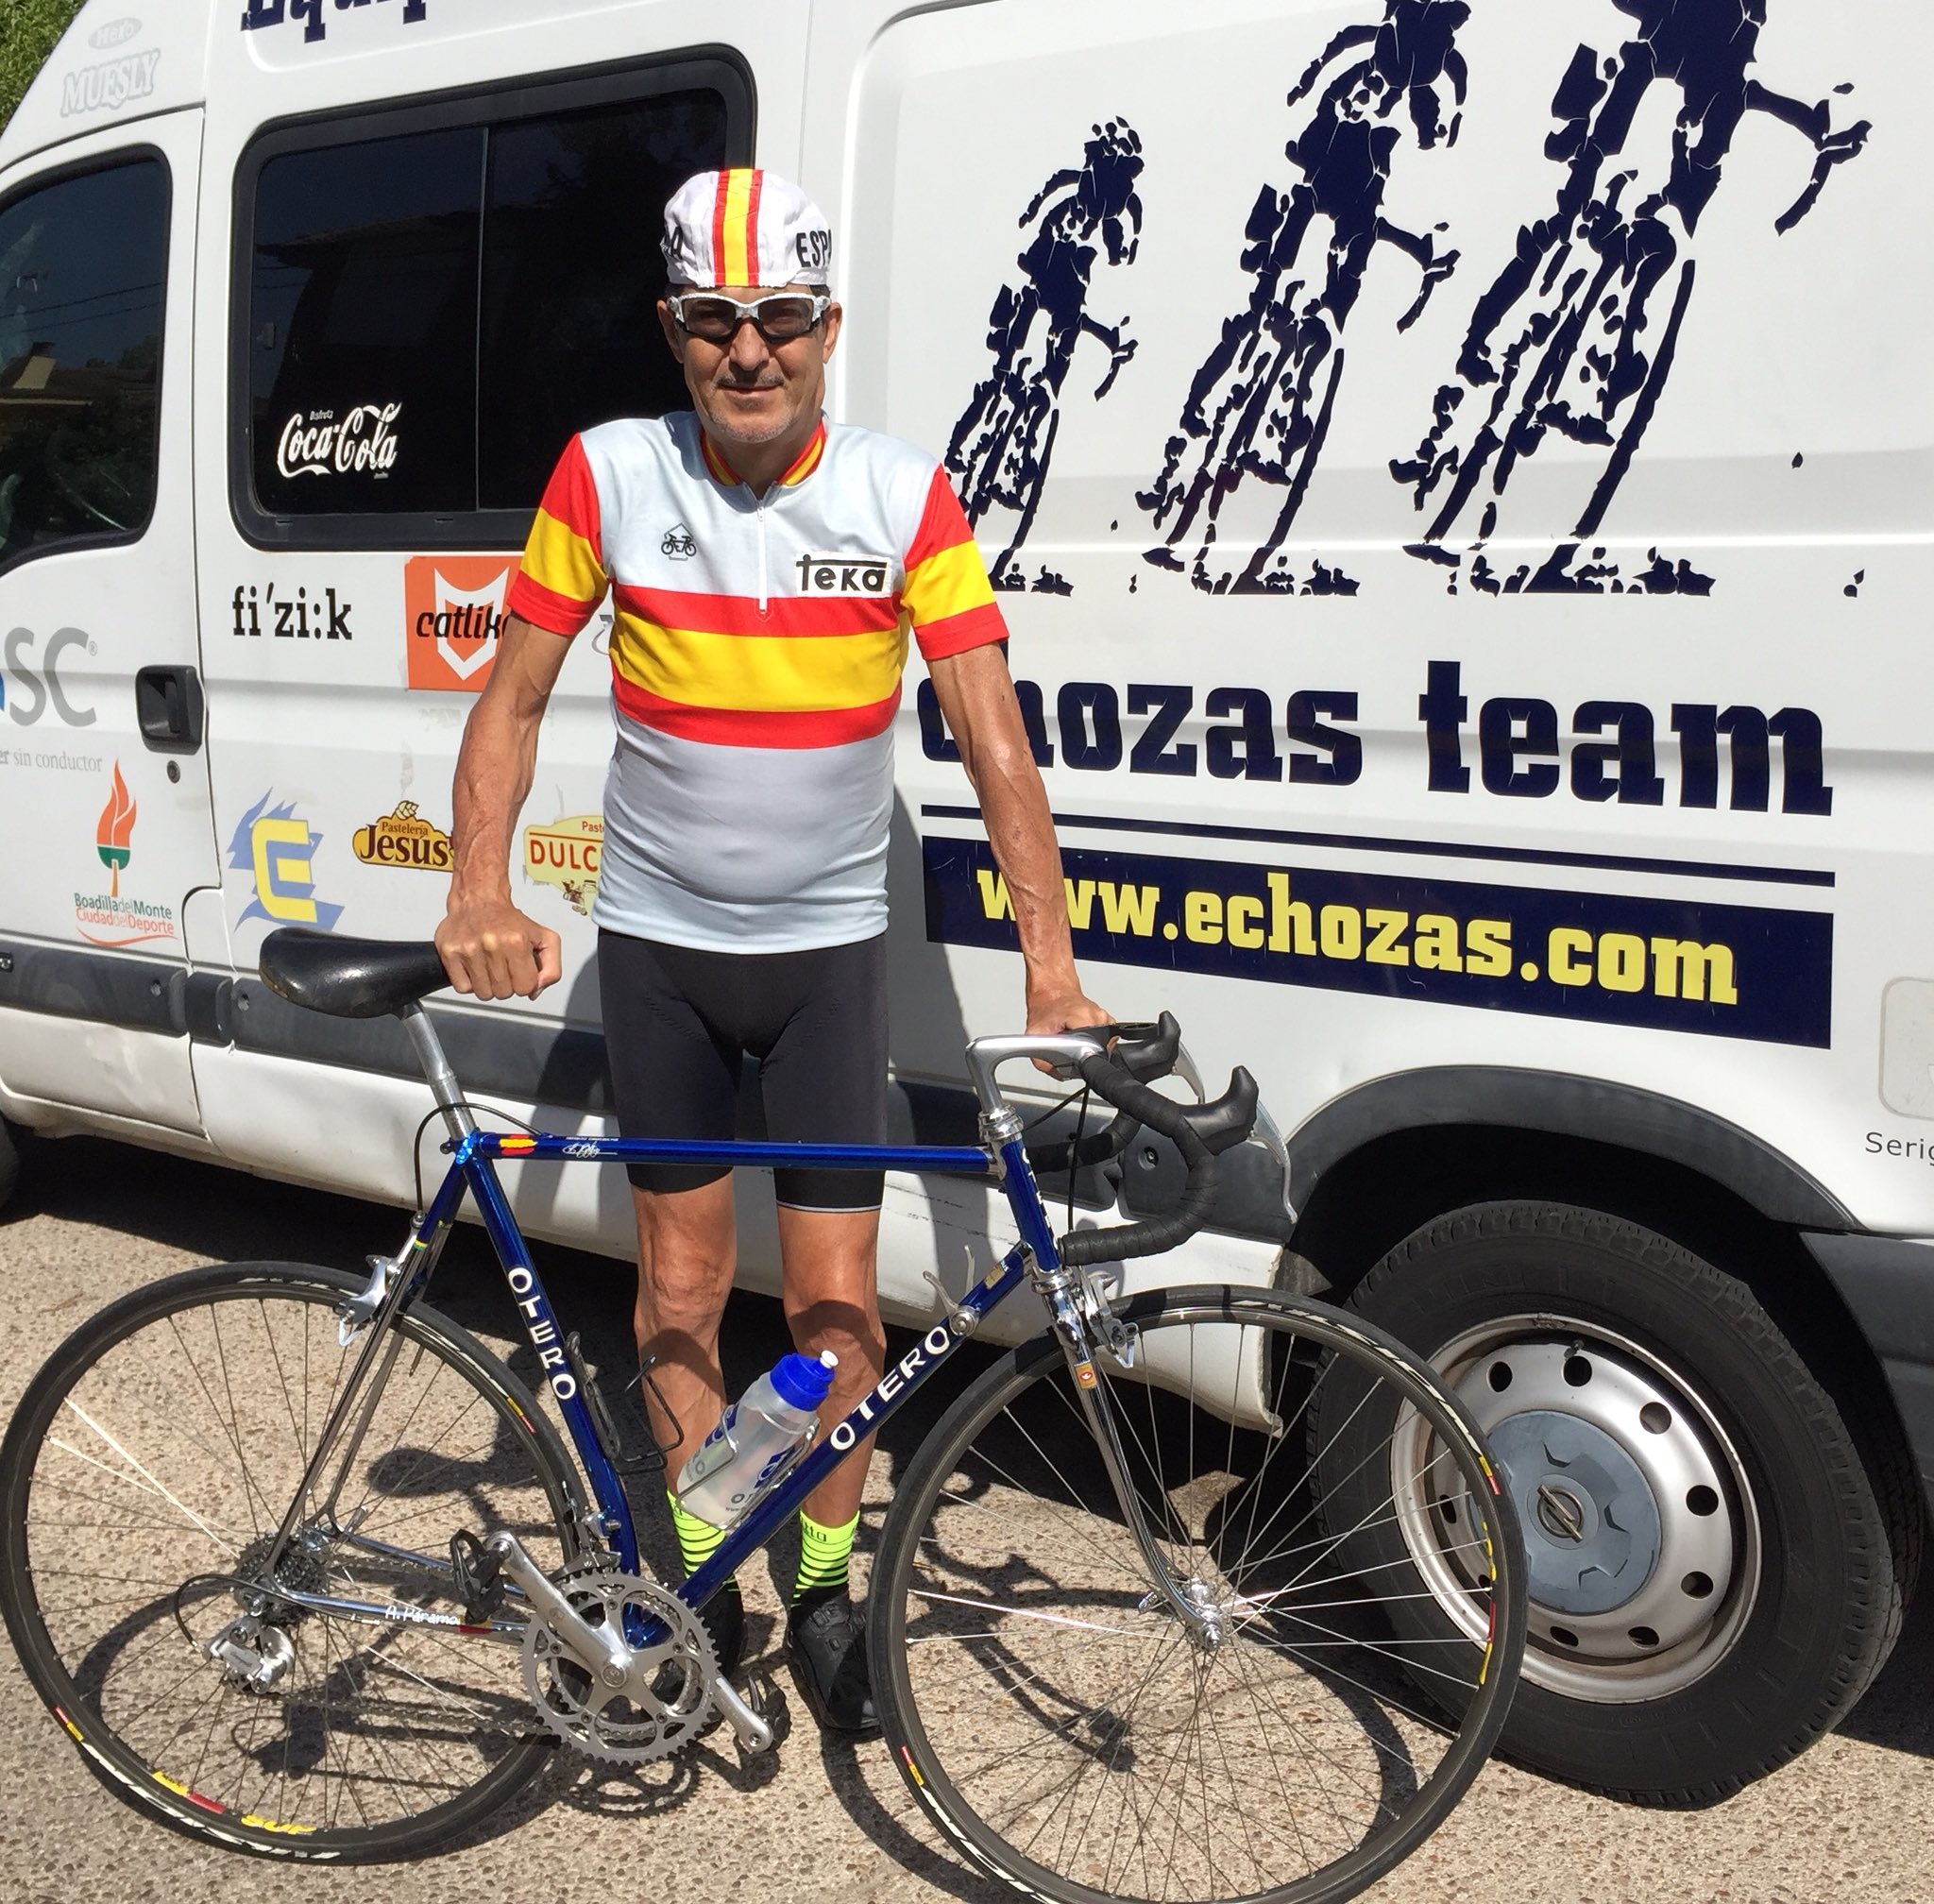 Eduardo Chozas on Twitter: "Hoy probando maillot de la selección con el que corrí el mundial de 1986 en Colorado y bici @BicicletasOtero para mañana #ClásicaOtero bicis de época https://t.co/xTtTXdaLmf" /